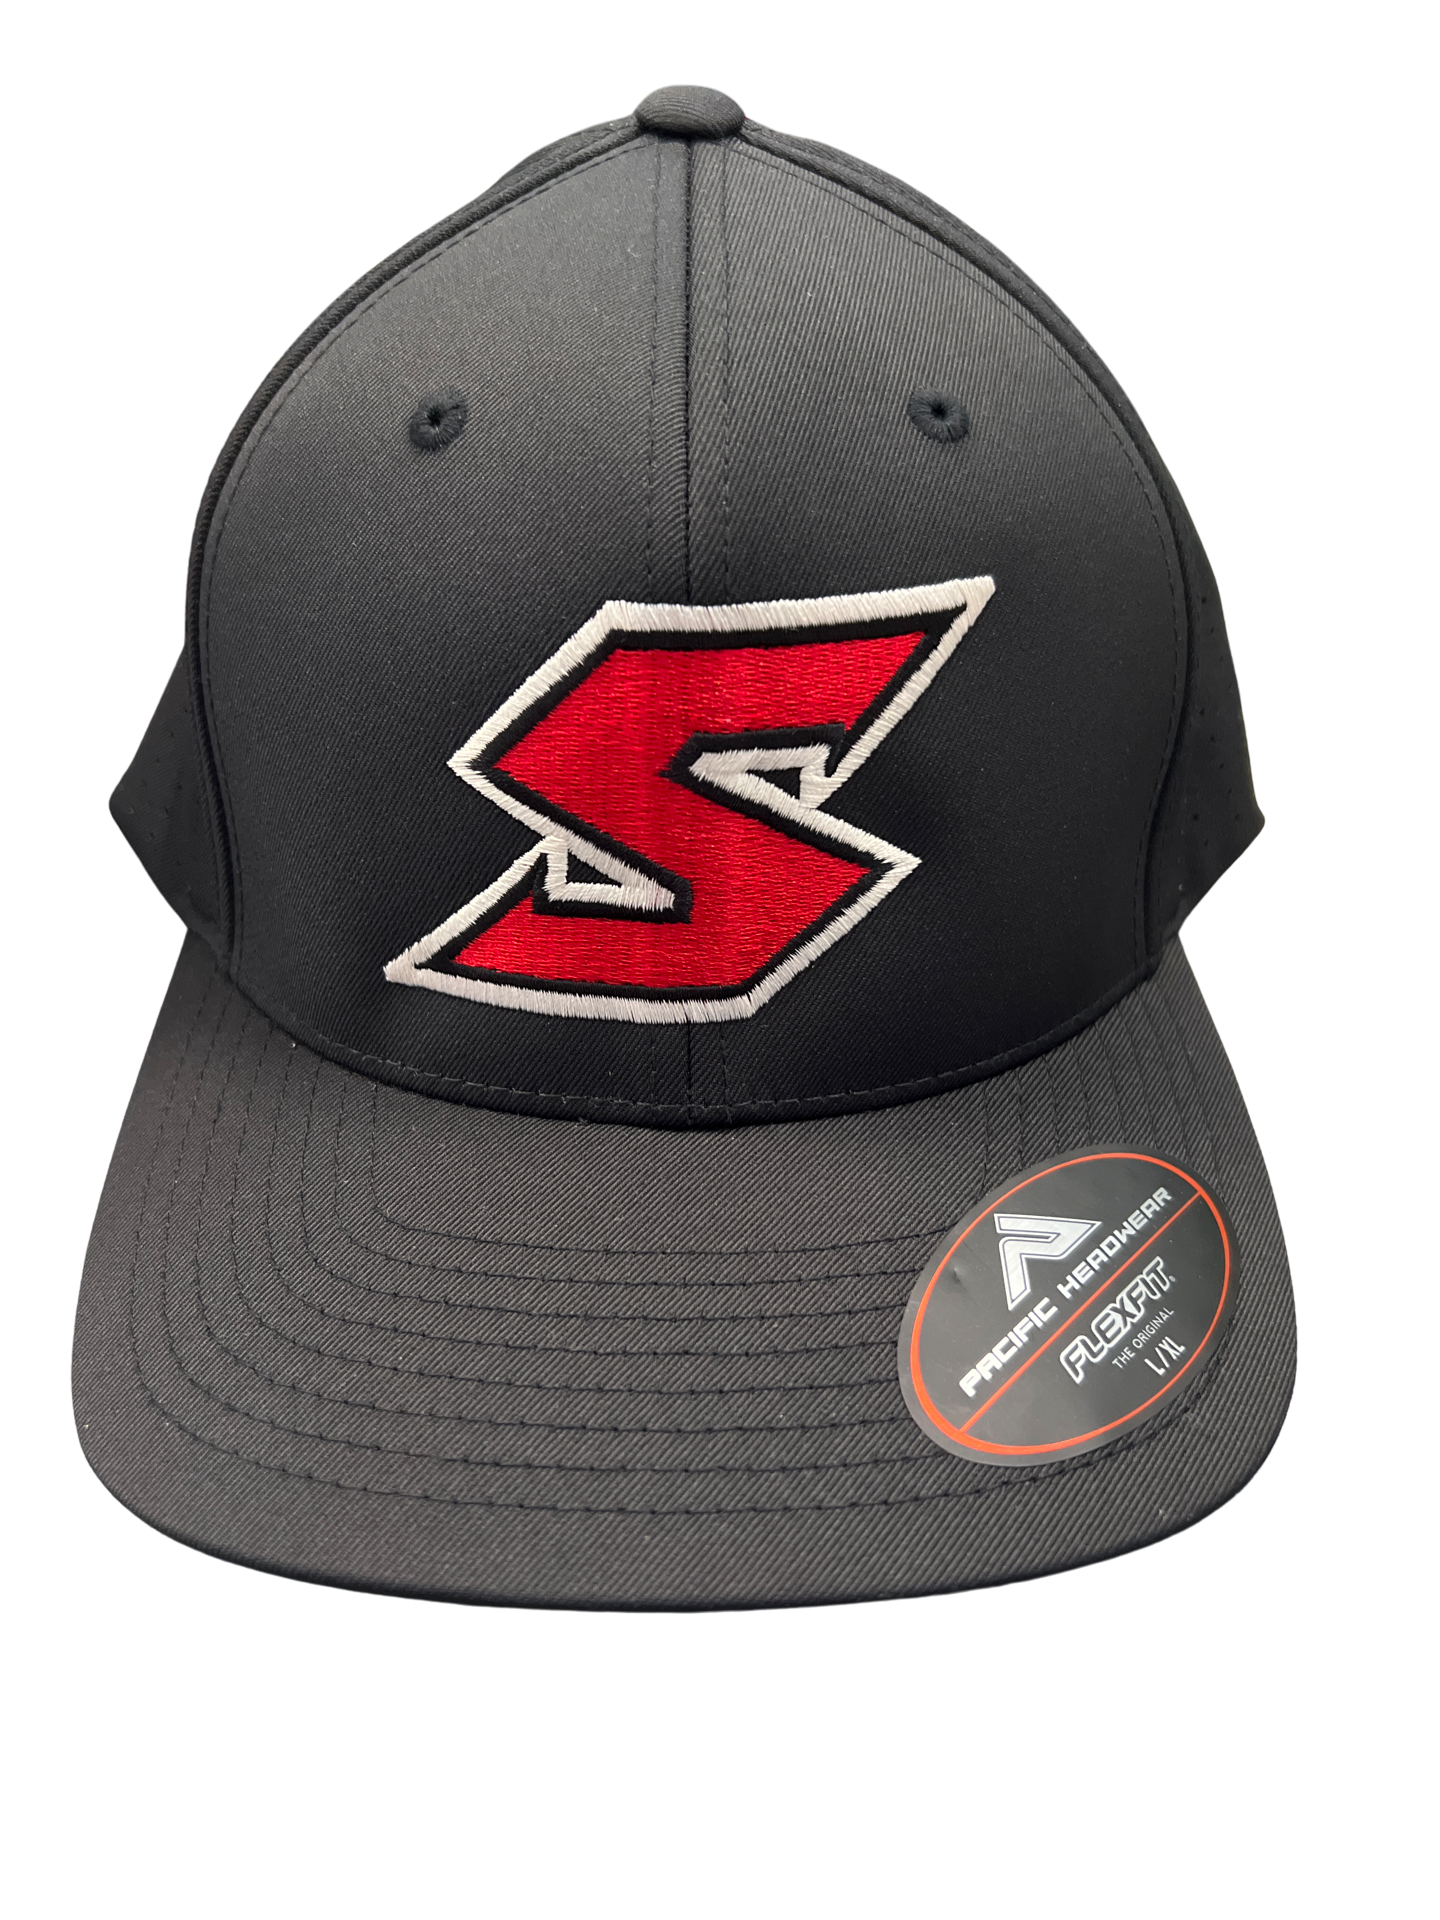 Black/Red Suncoast Suncoast 474 Hat - Softball Flexfit S